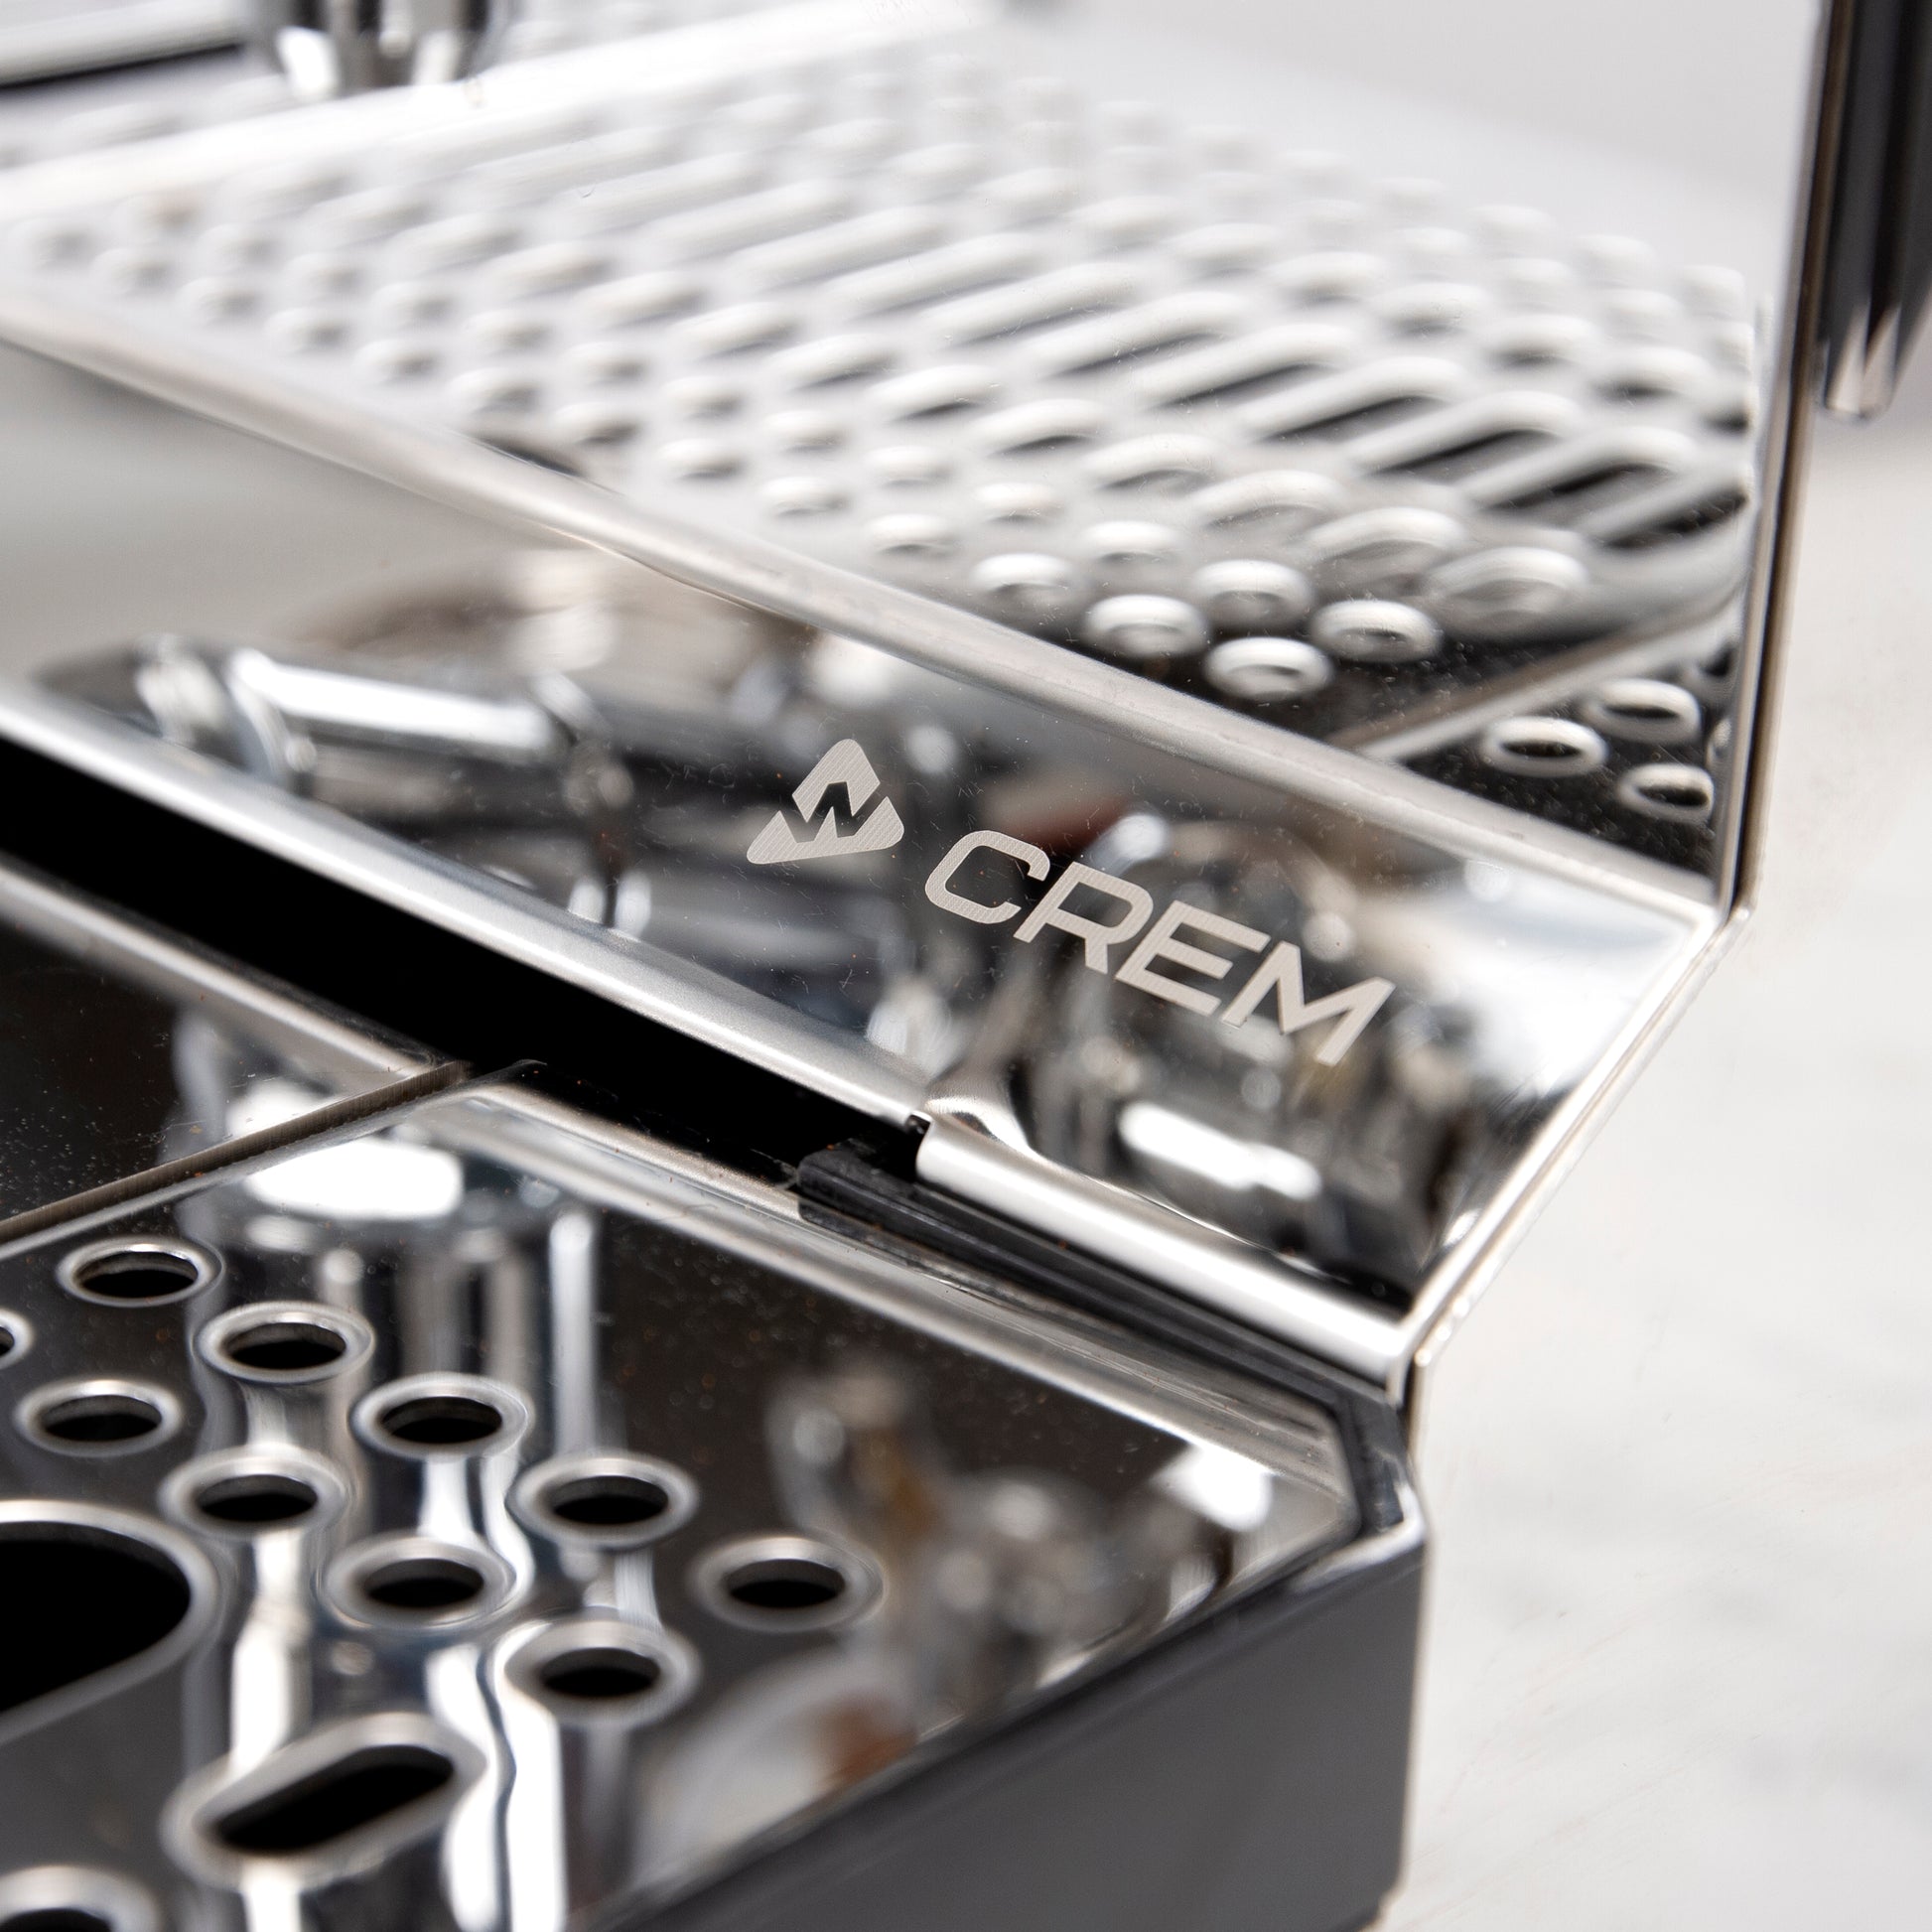 Crem ONE INFUSER Dual Boiler Espresso Machine – Whole Latte Love